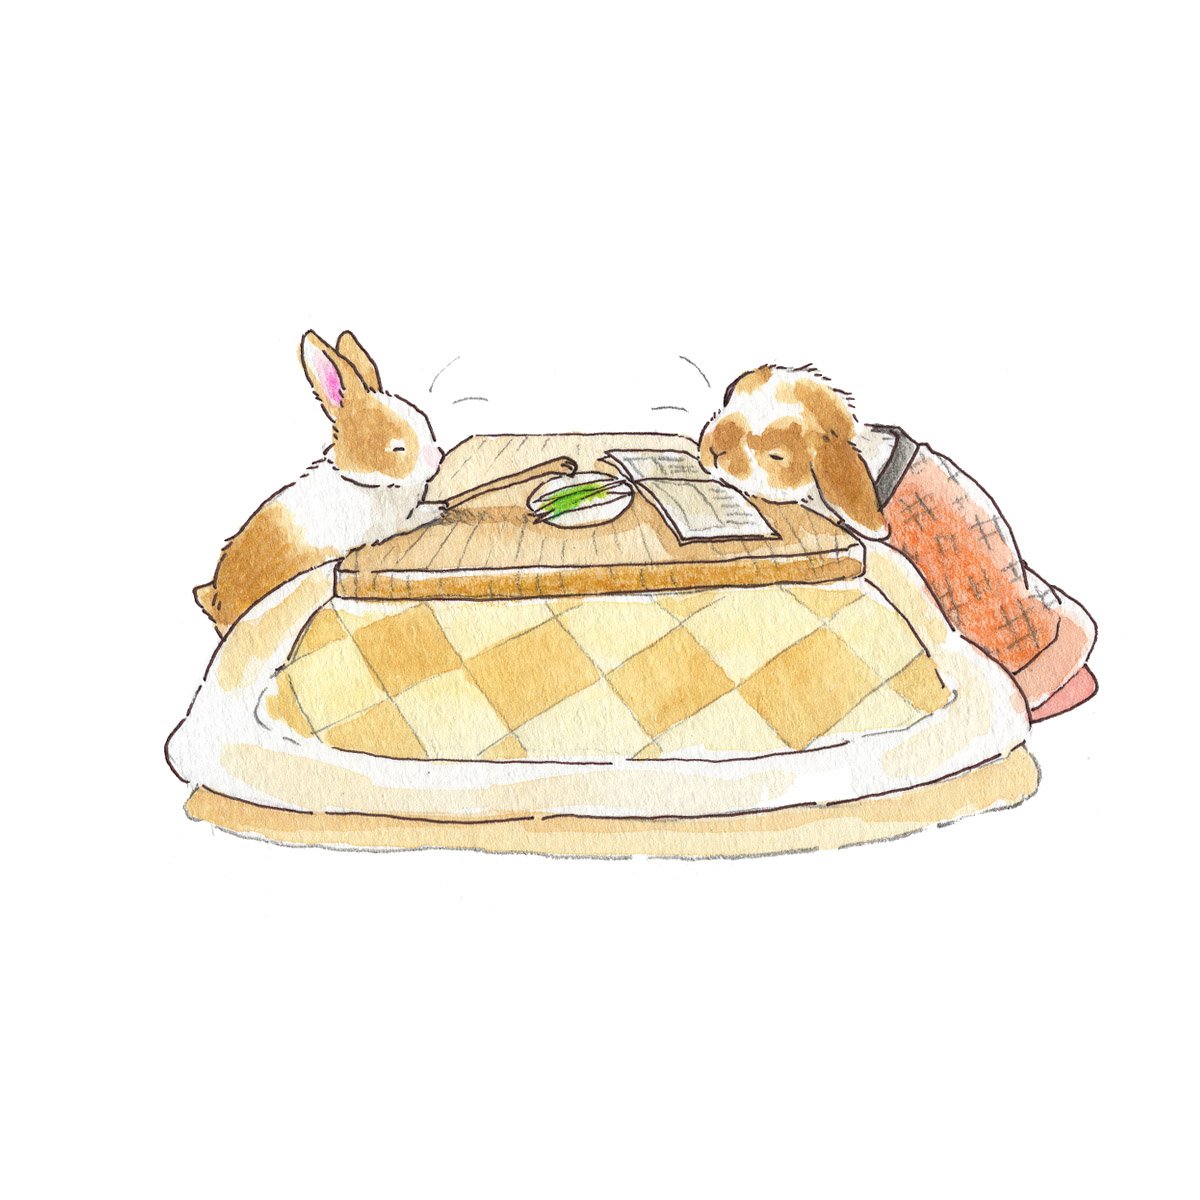 no humans kotatsu table rabbit white background simple background animal  illustration images